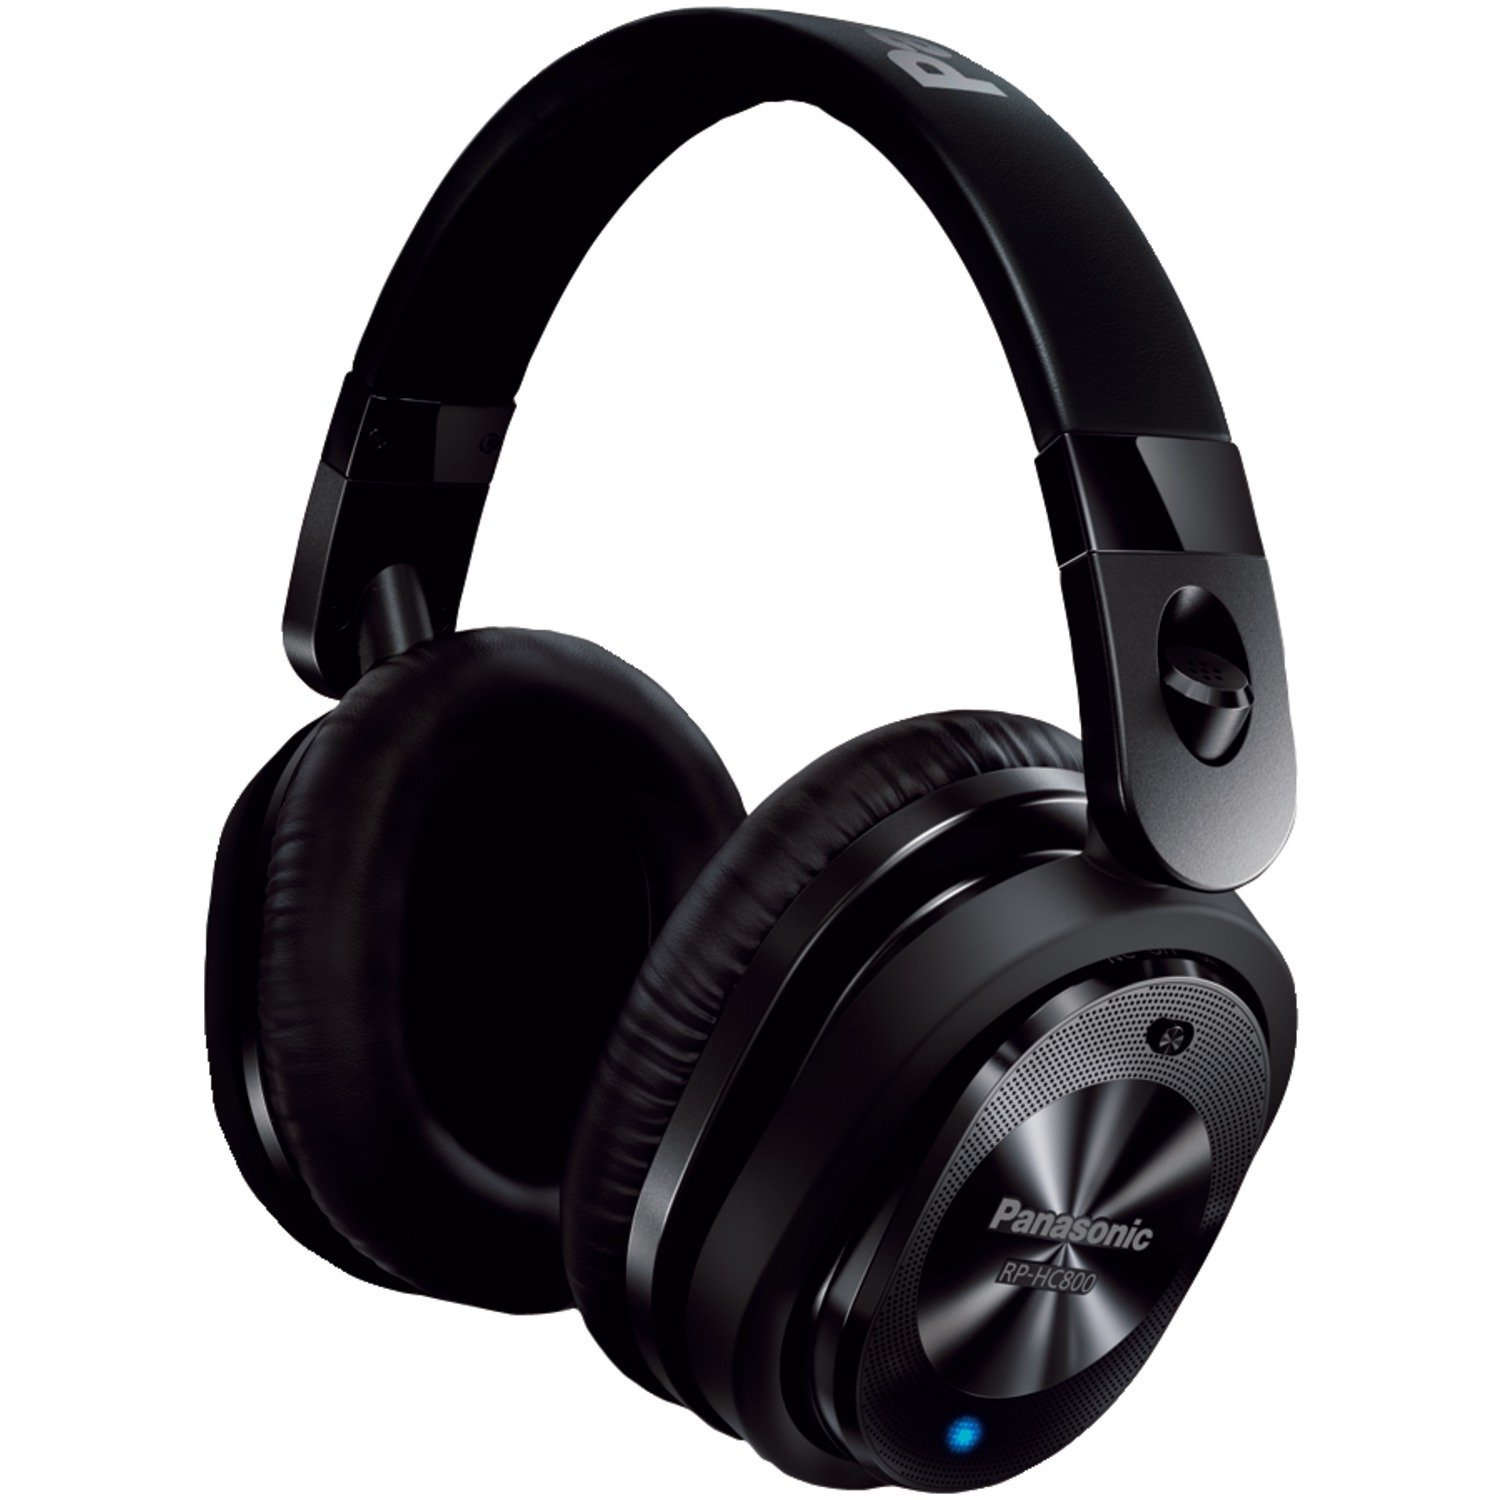 Refurbished (Good) - Panasonic Premium Noise Cancelling Over-Ear Headphones with Travel Case RP-HC800-K - Black